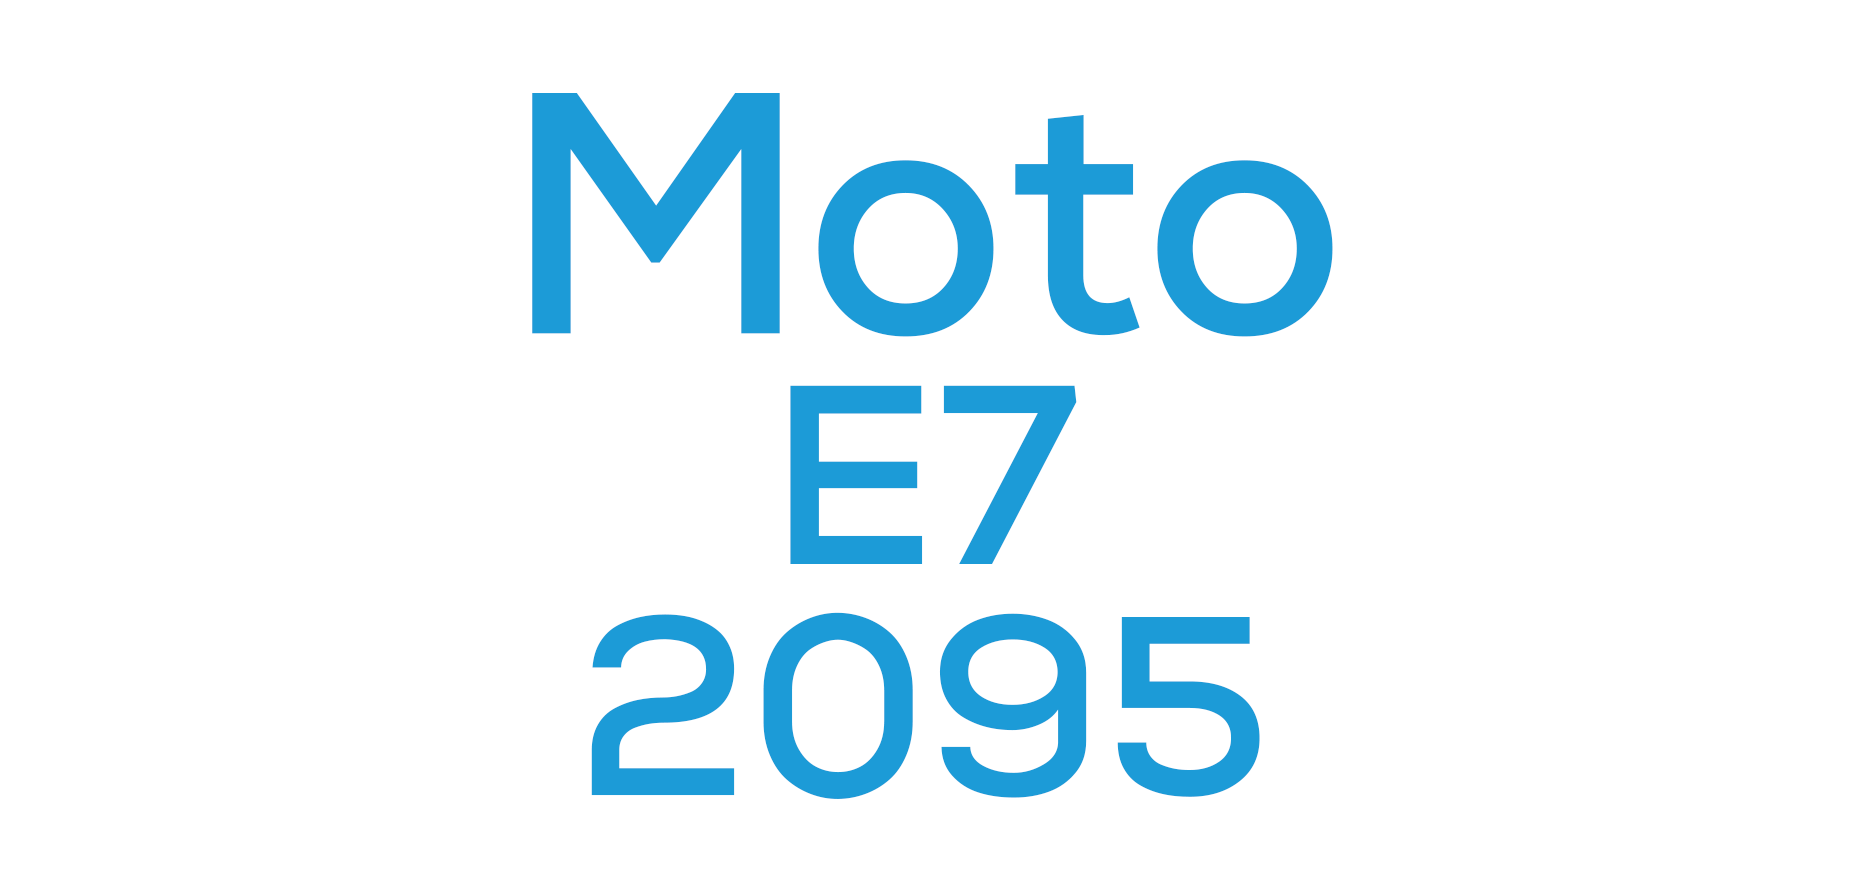 Moto E7 (2095)